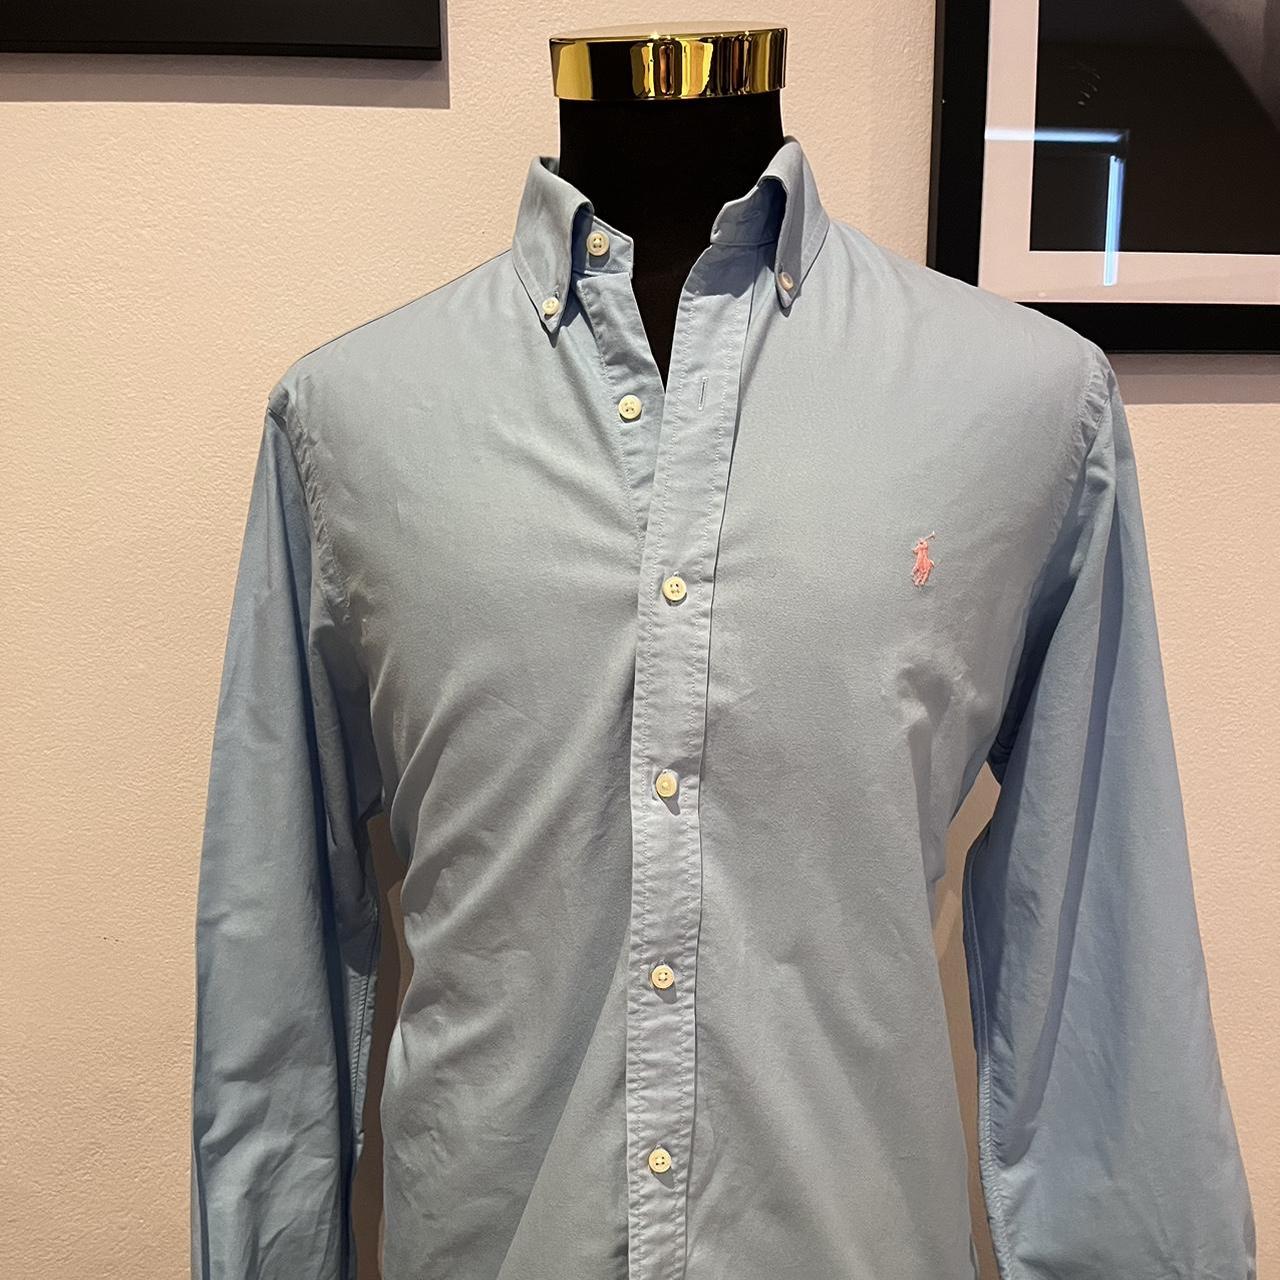 Ralph Lauren Polo Ralph Lauren 100% Cotton Pastel Blue Shirt Size Large Button Down Collar